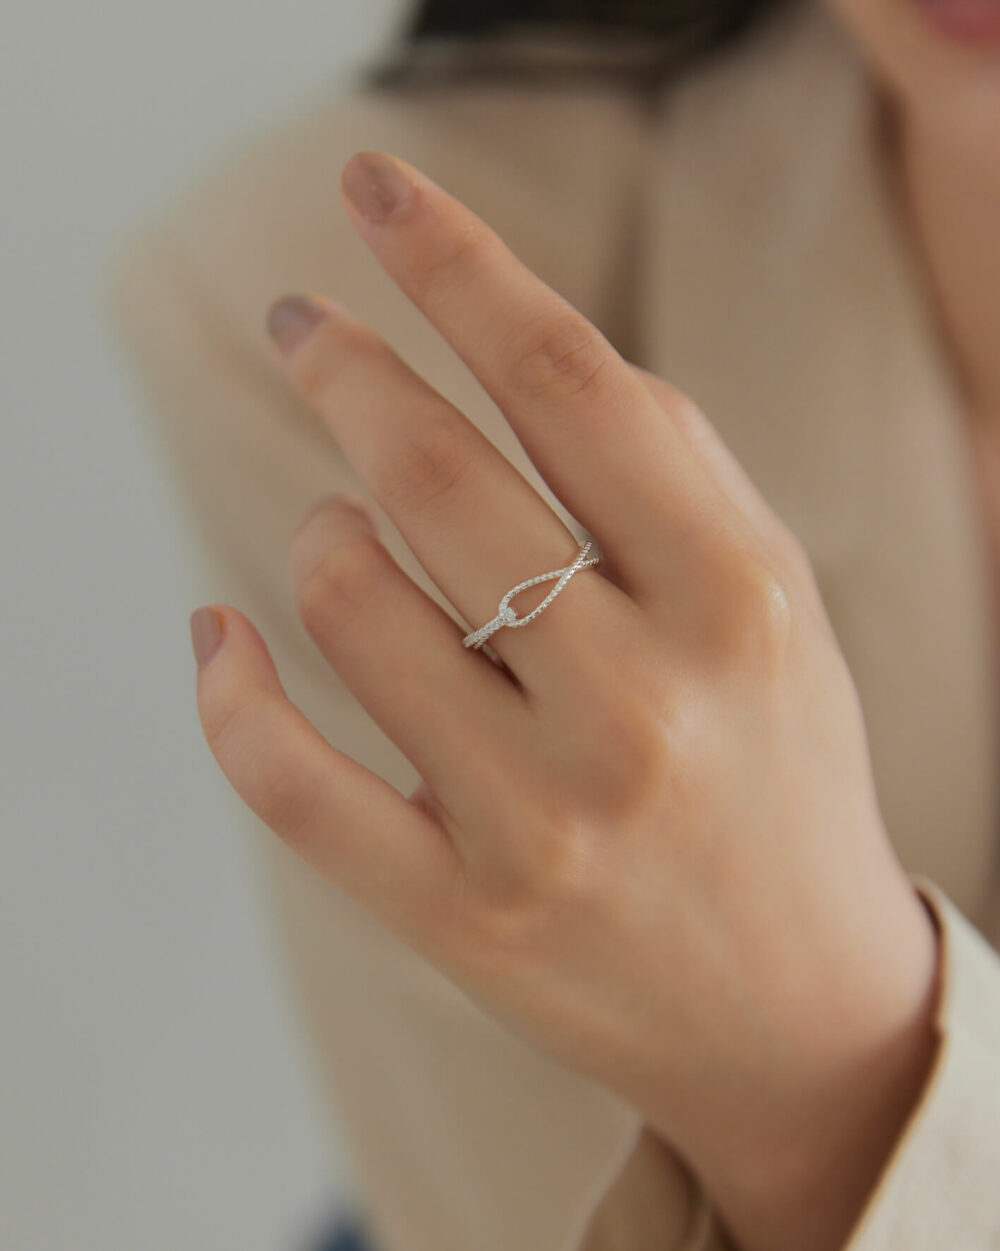 Eco安珂,韓國飾品,韓國戒指,韓國925純銀戒指,925純銀戒指,純銀戒指,活圍戒